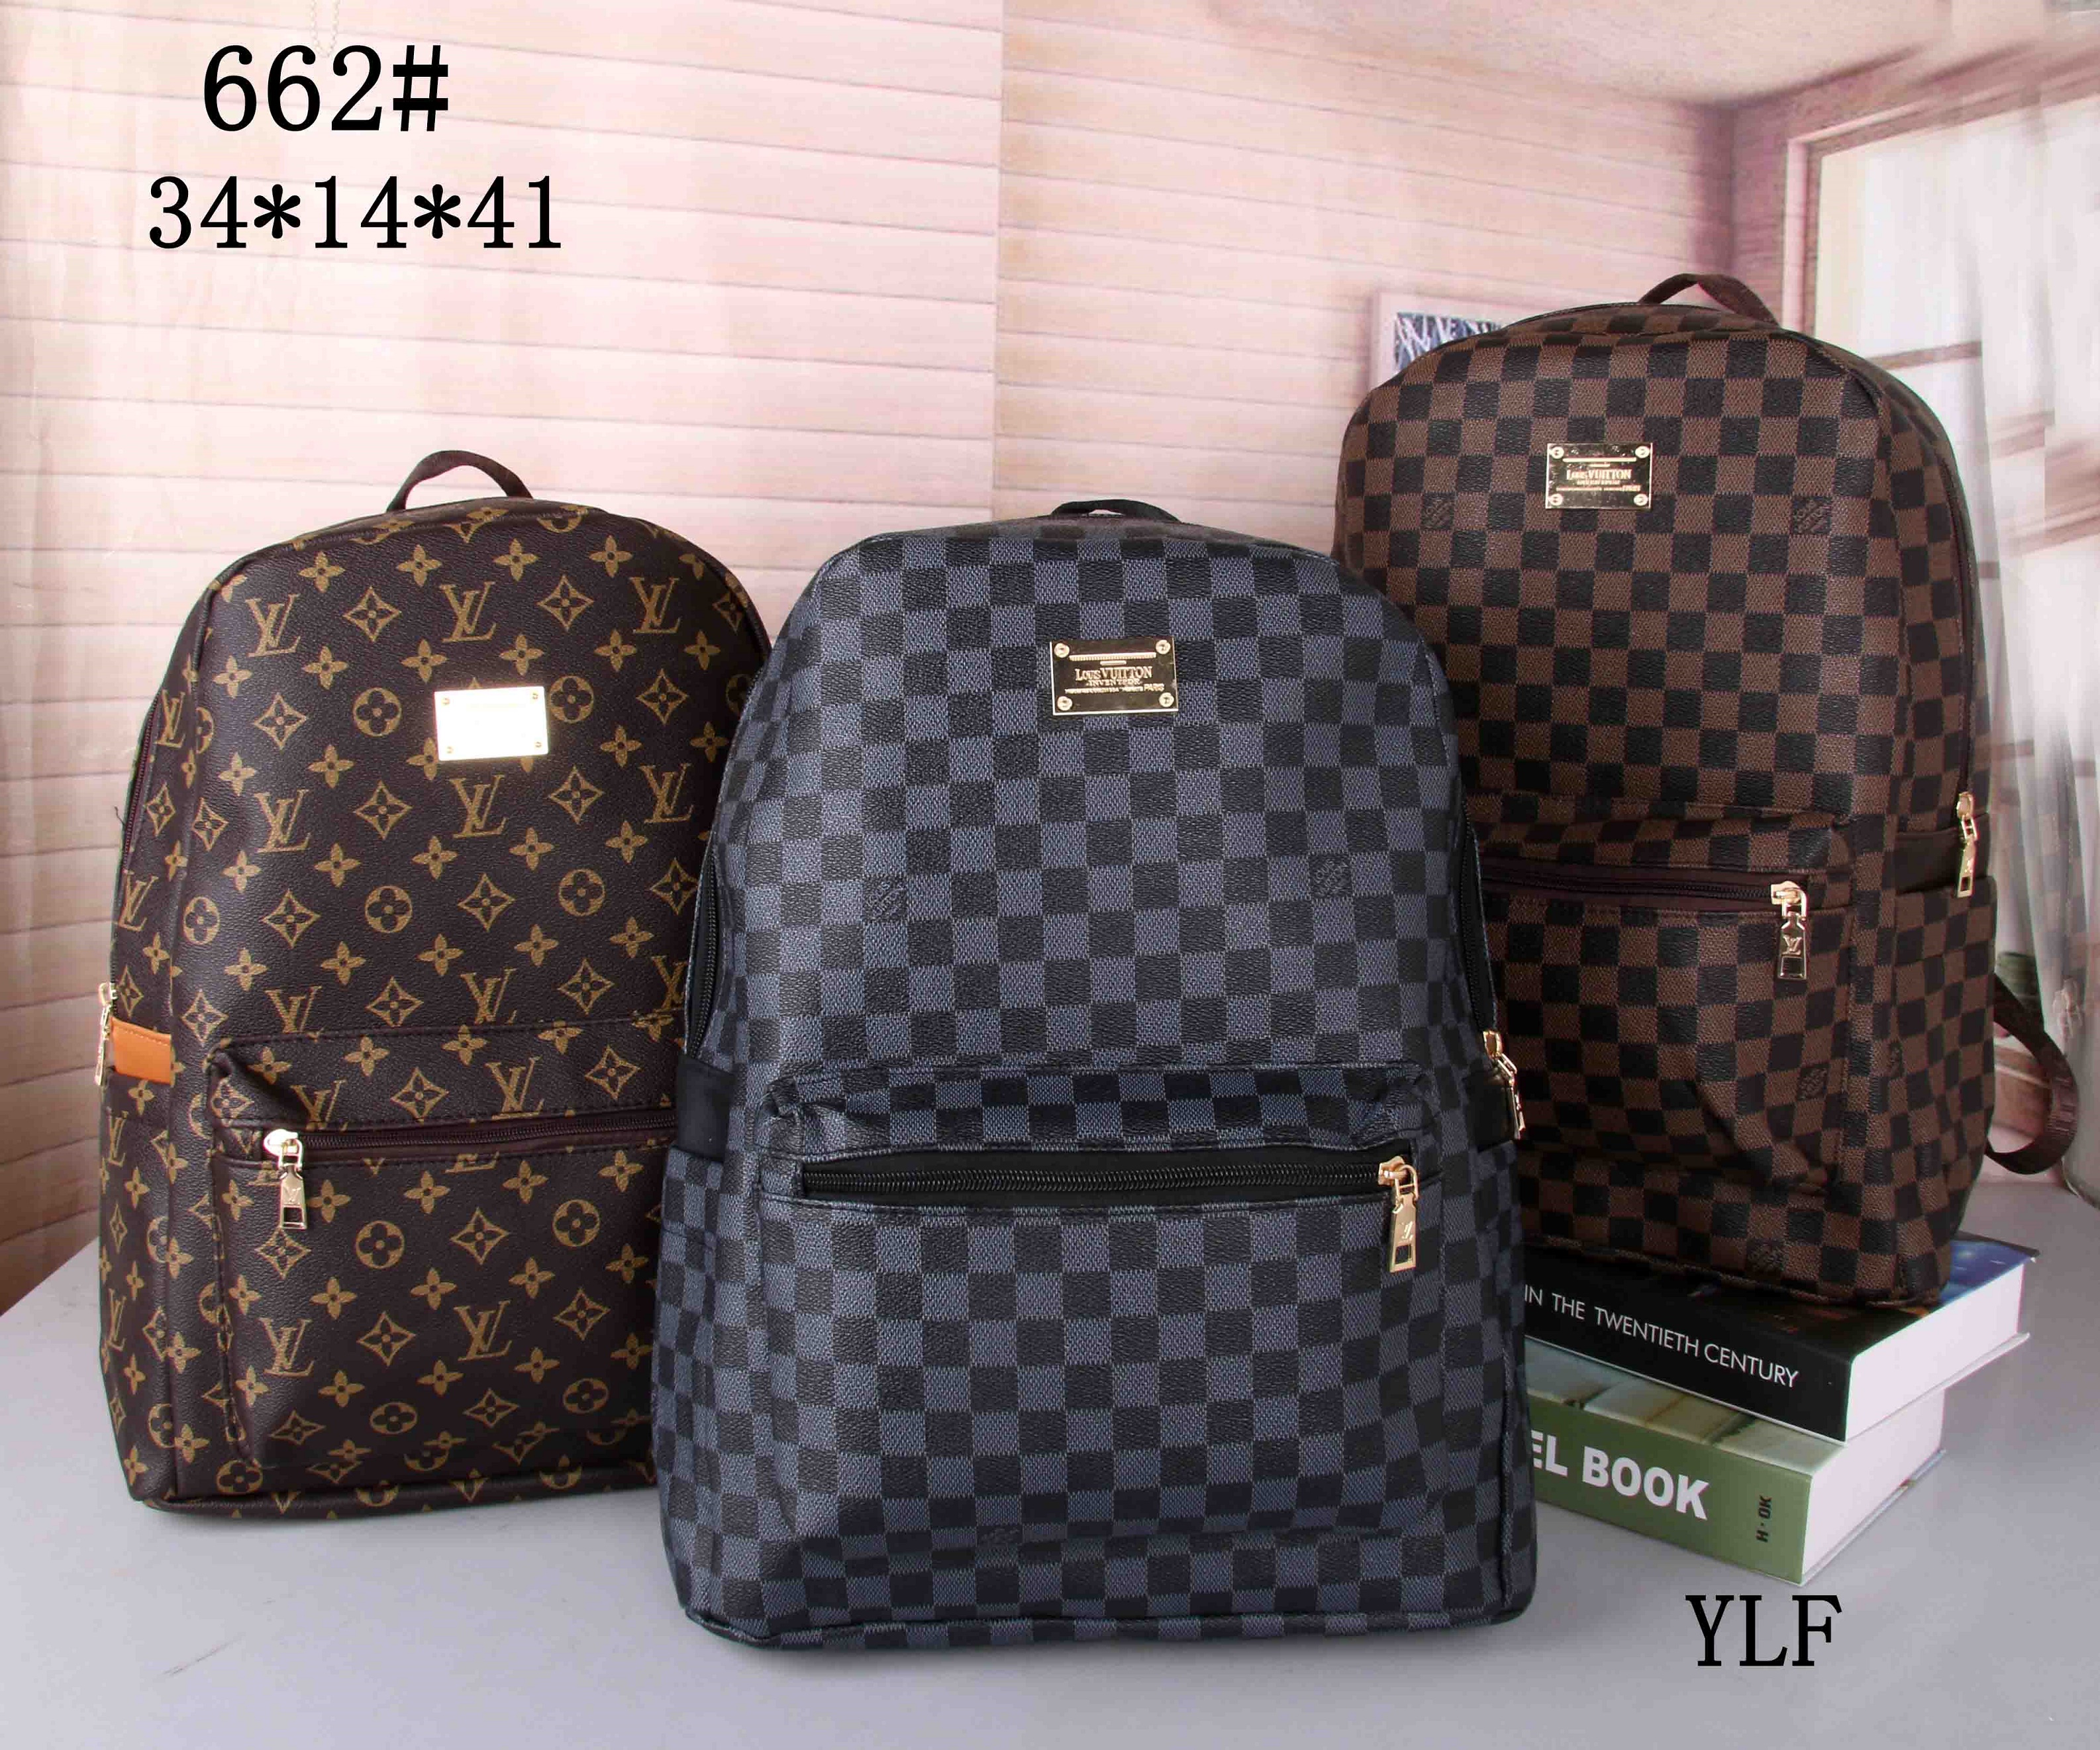 

Hot Sell Classic Fashion bags brand designer Women Men Backpack Style Bag Unisex Shoulder Handbags Travel hiking bag #662